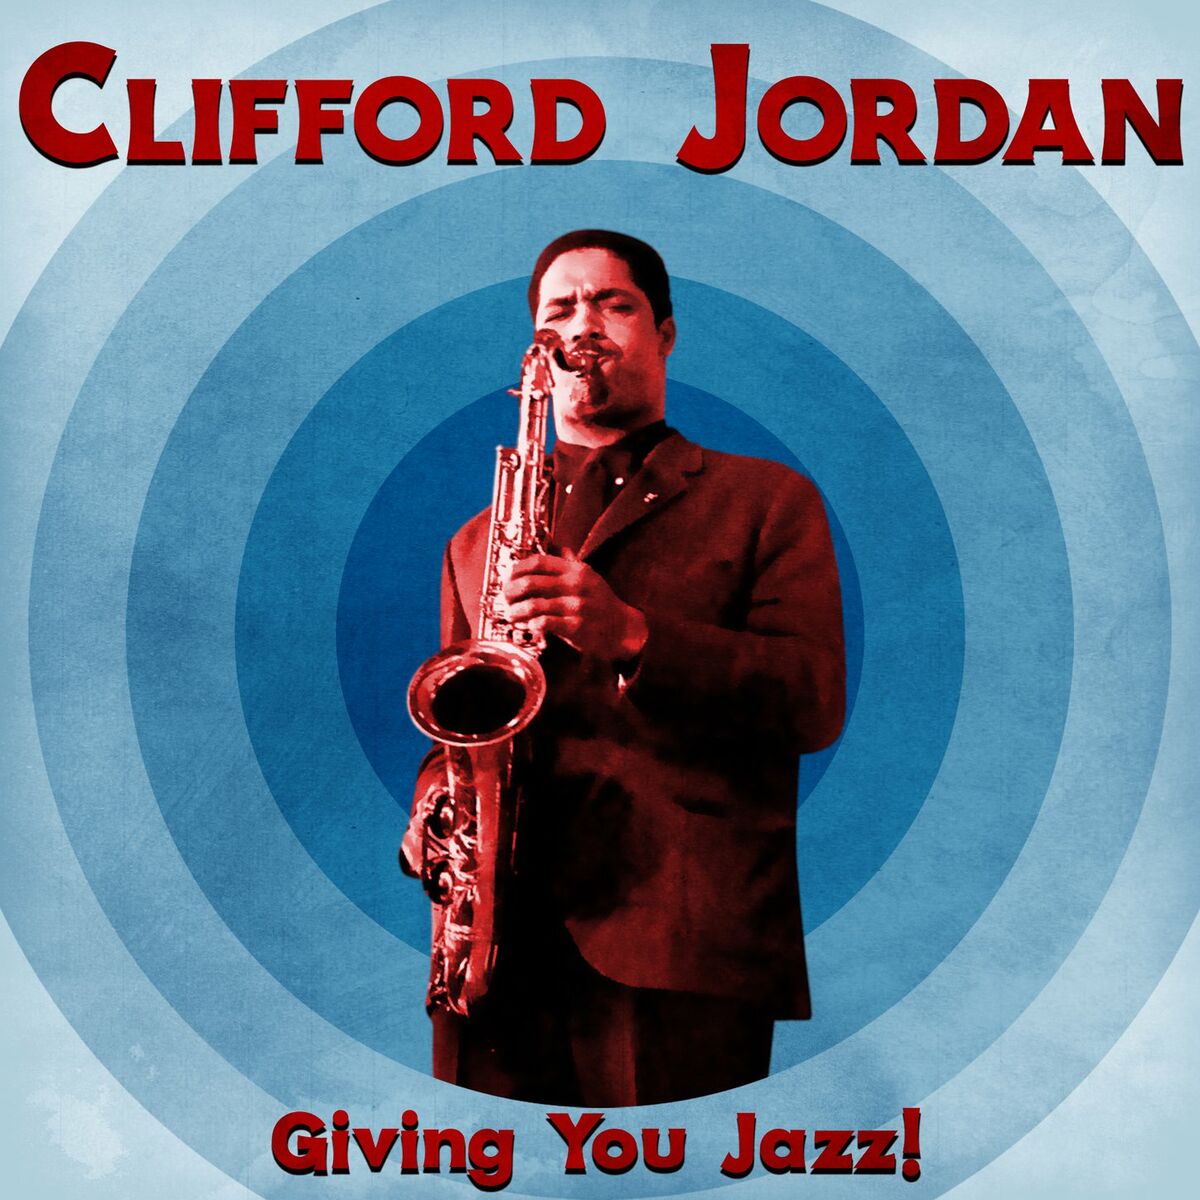 Clifford Jordan: albums, songs, playlists | Listen on Deezer